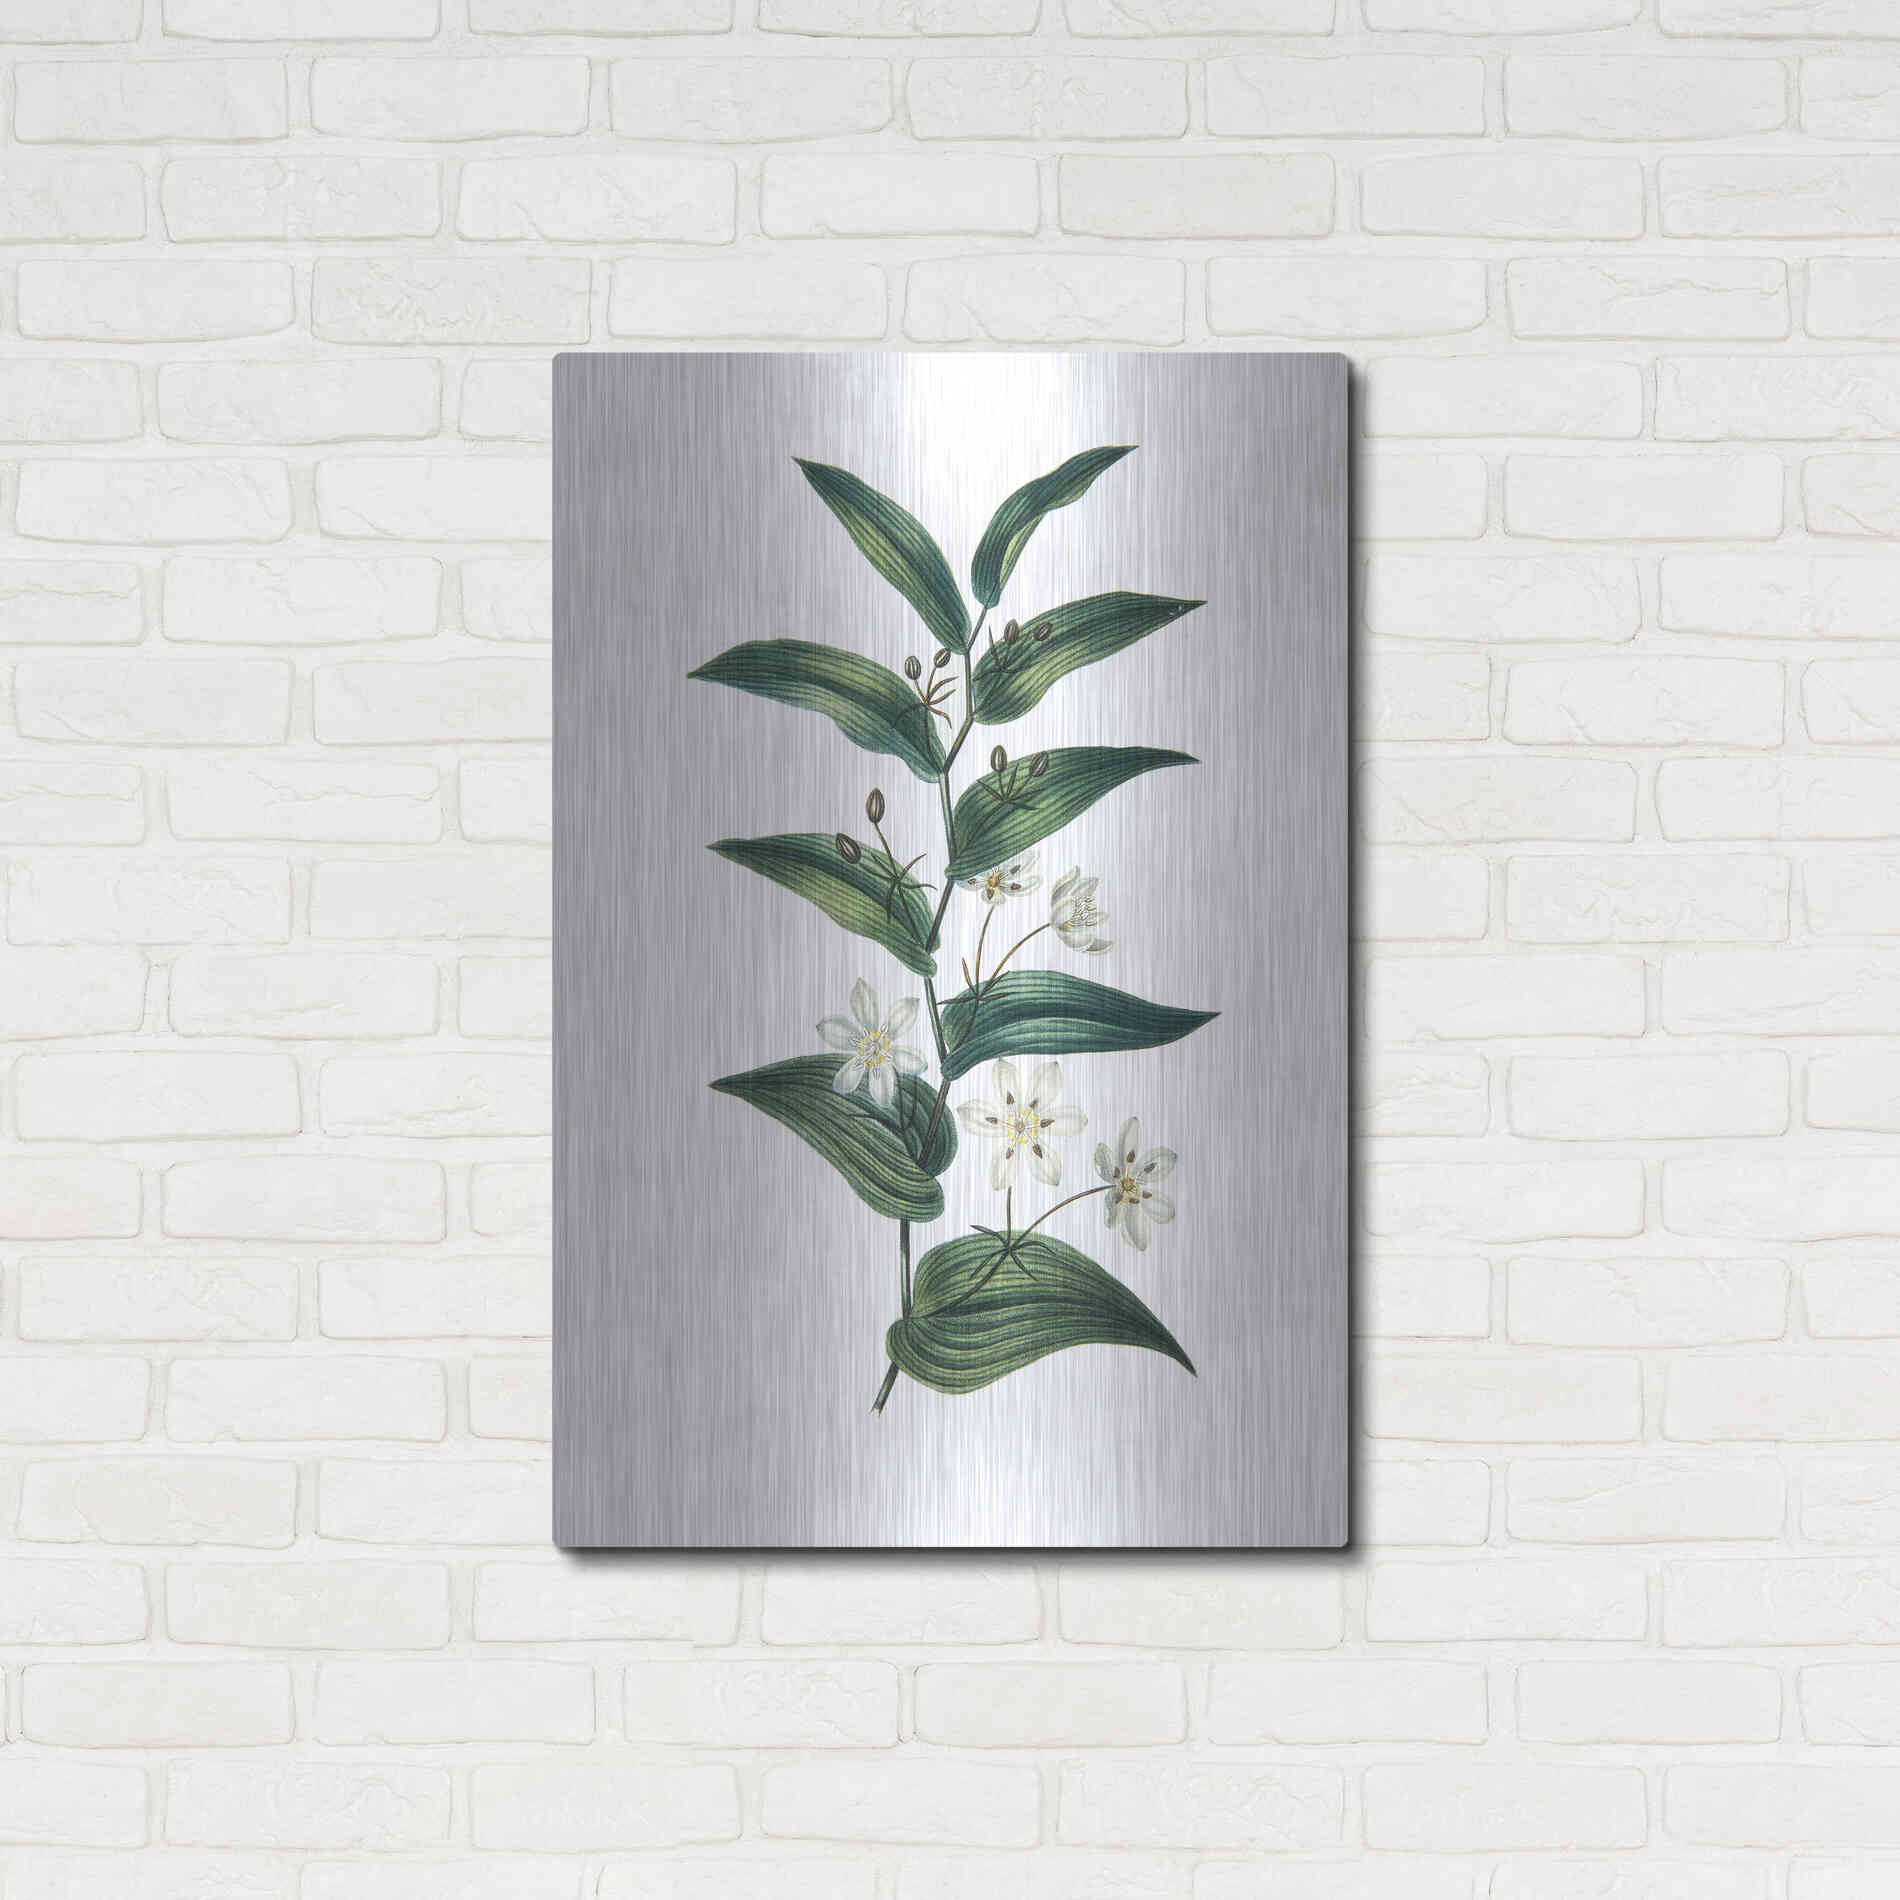 Luxe Metal Art 'Botanica I' by Incado, Metal Wall Art,24x36